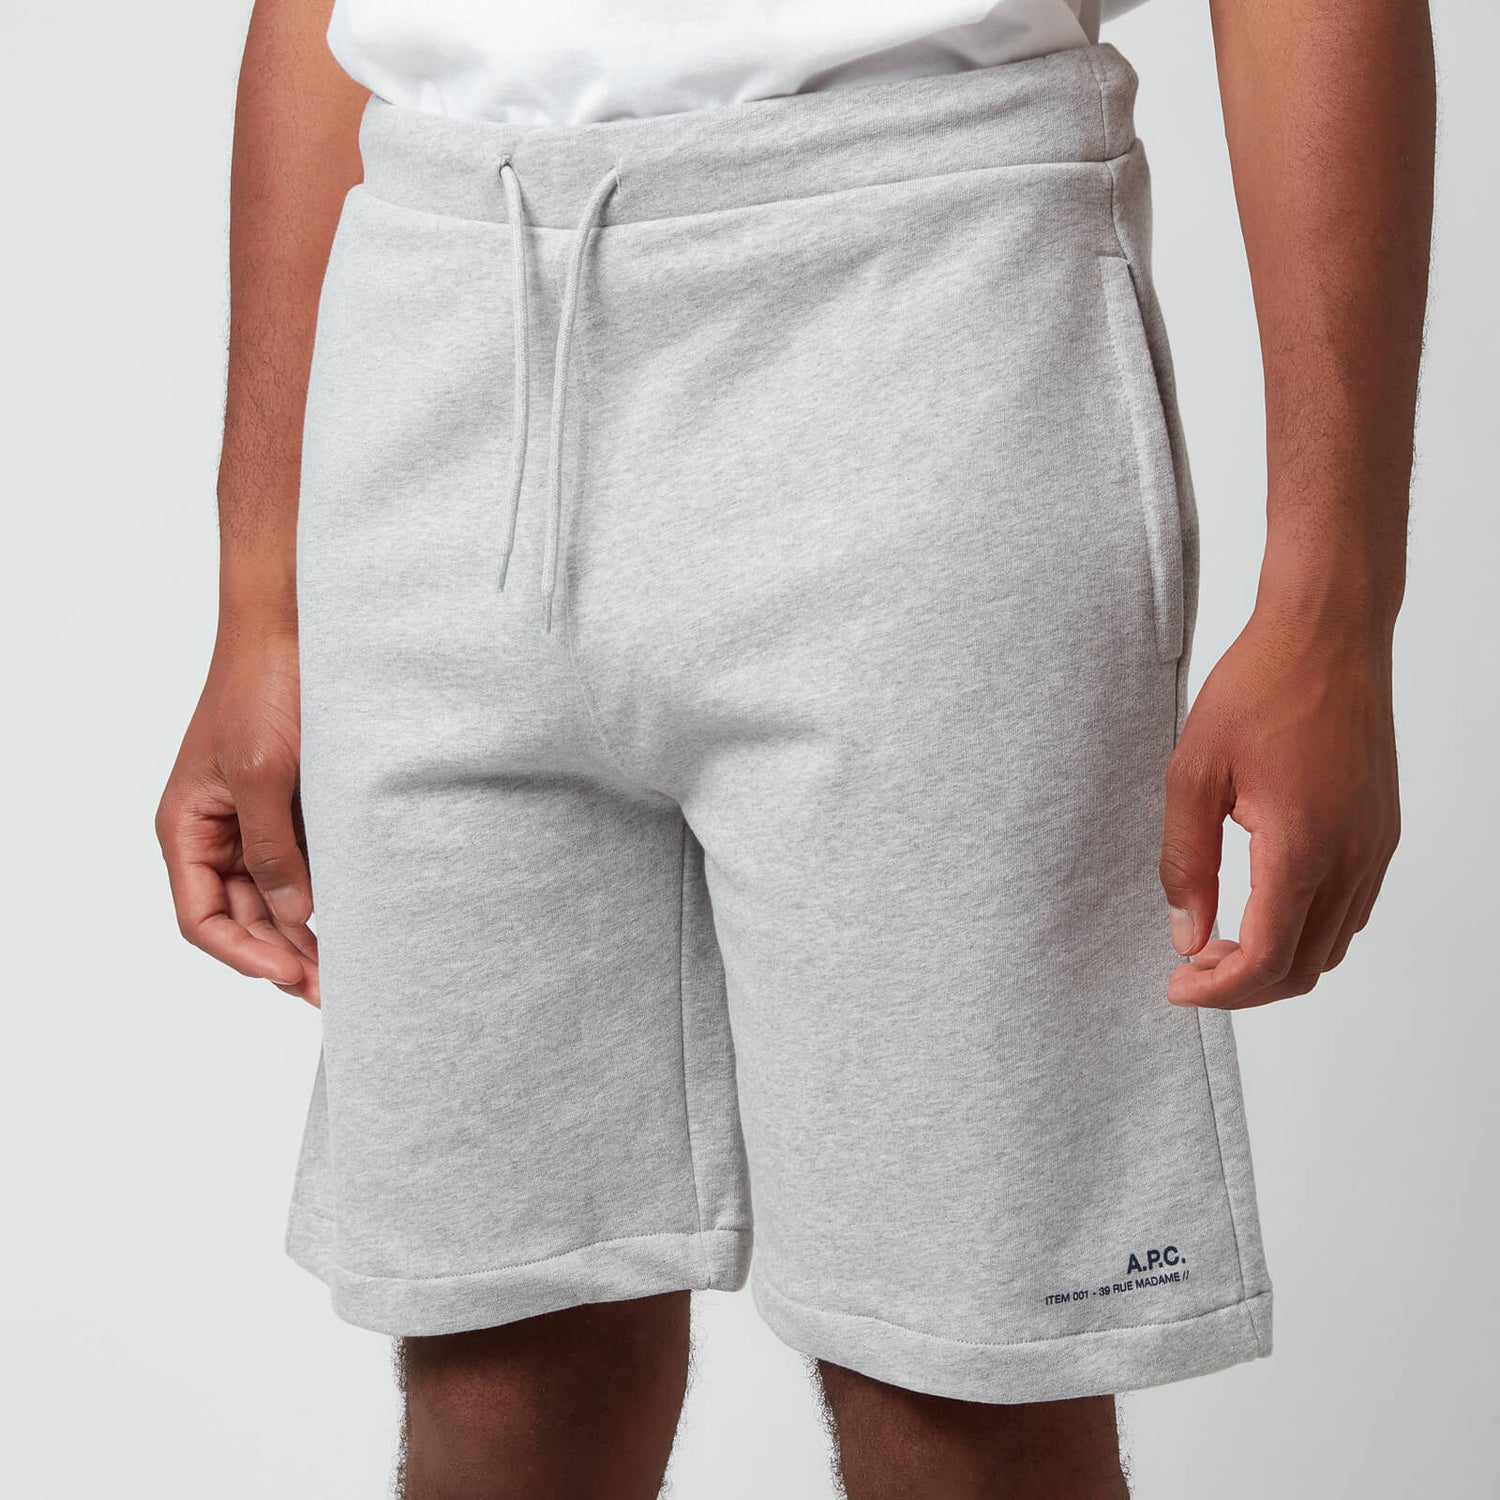 A.P.C. Men's Item Shorts - Heathered Light Grey - S